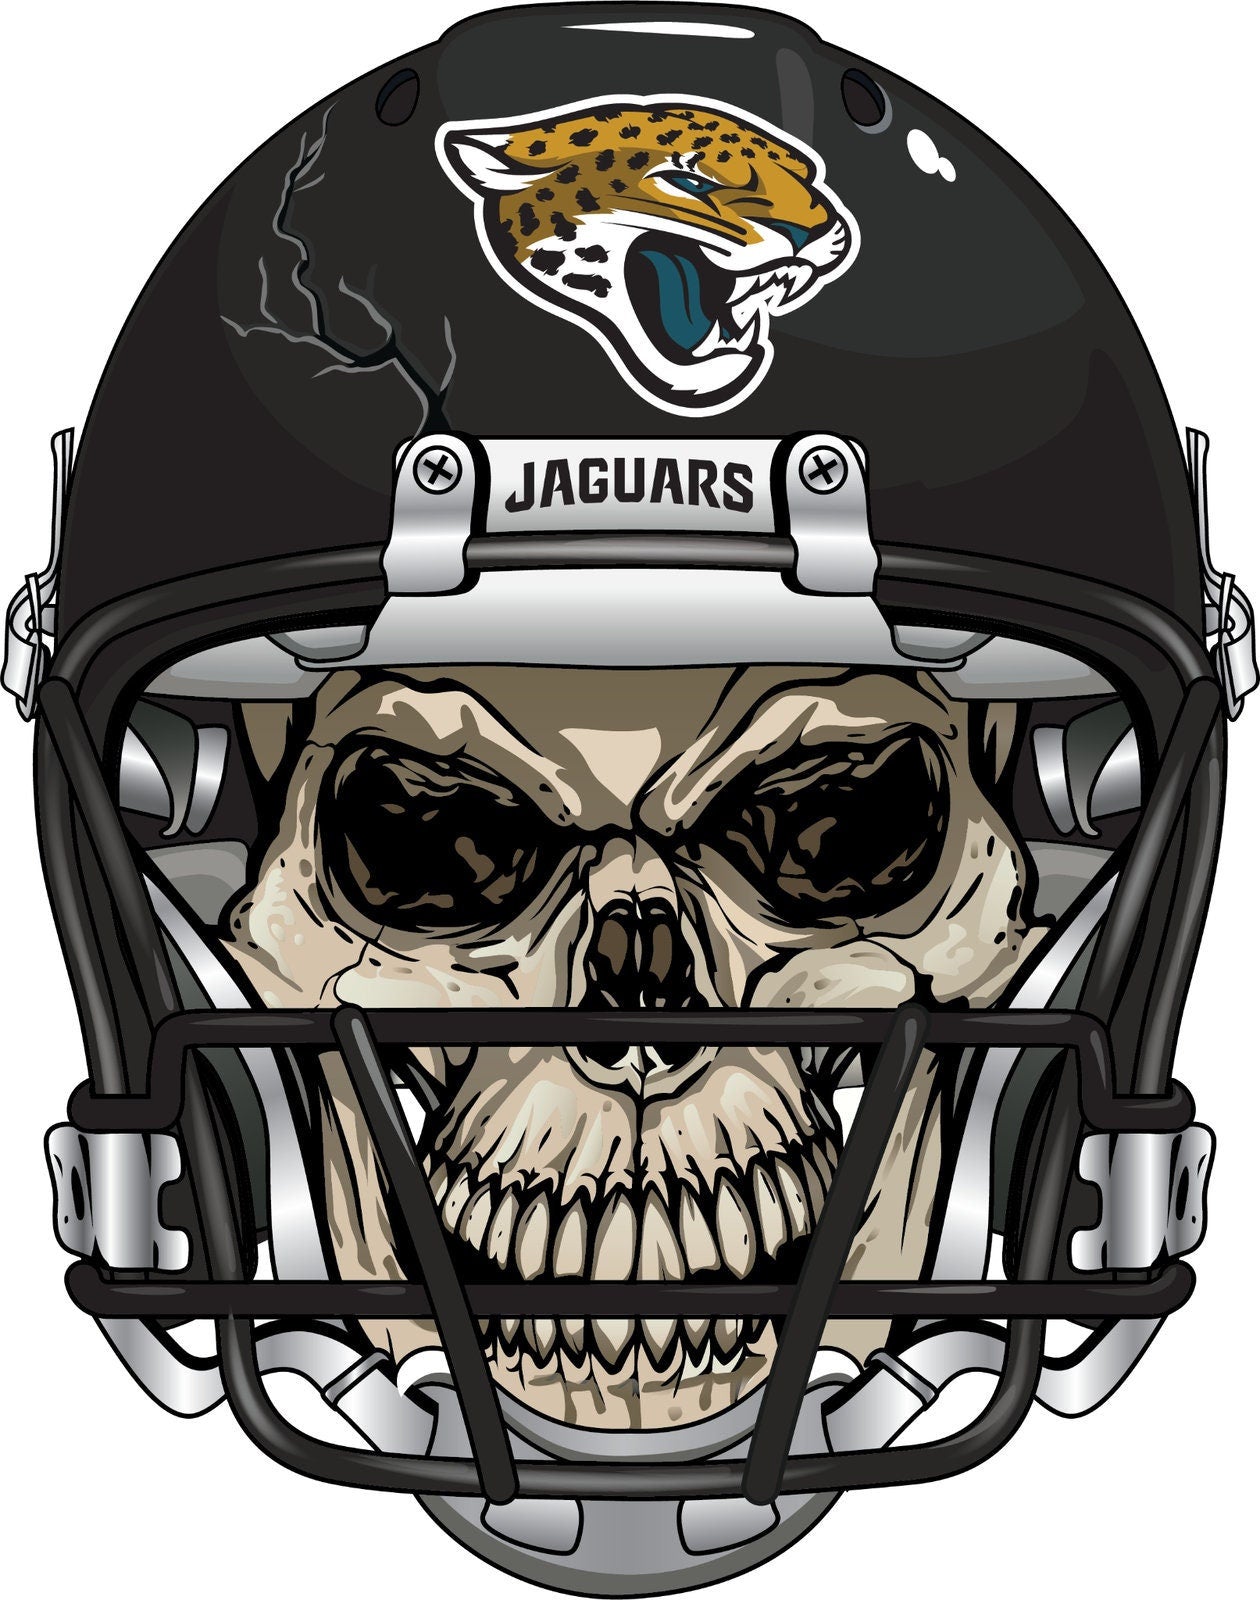 Jacksonville Jaguars Skull Helmet Large Print - Car Wall Decal